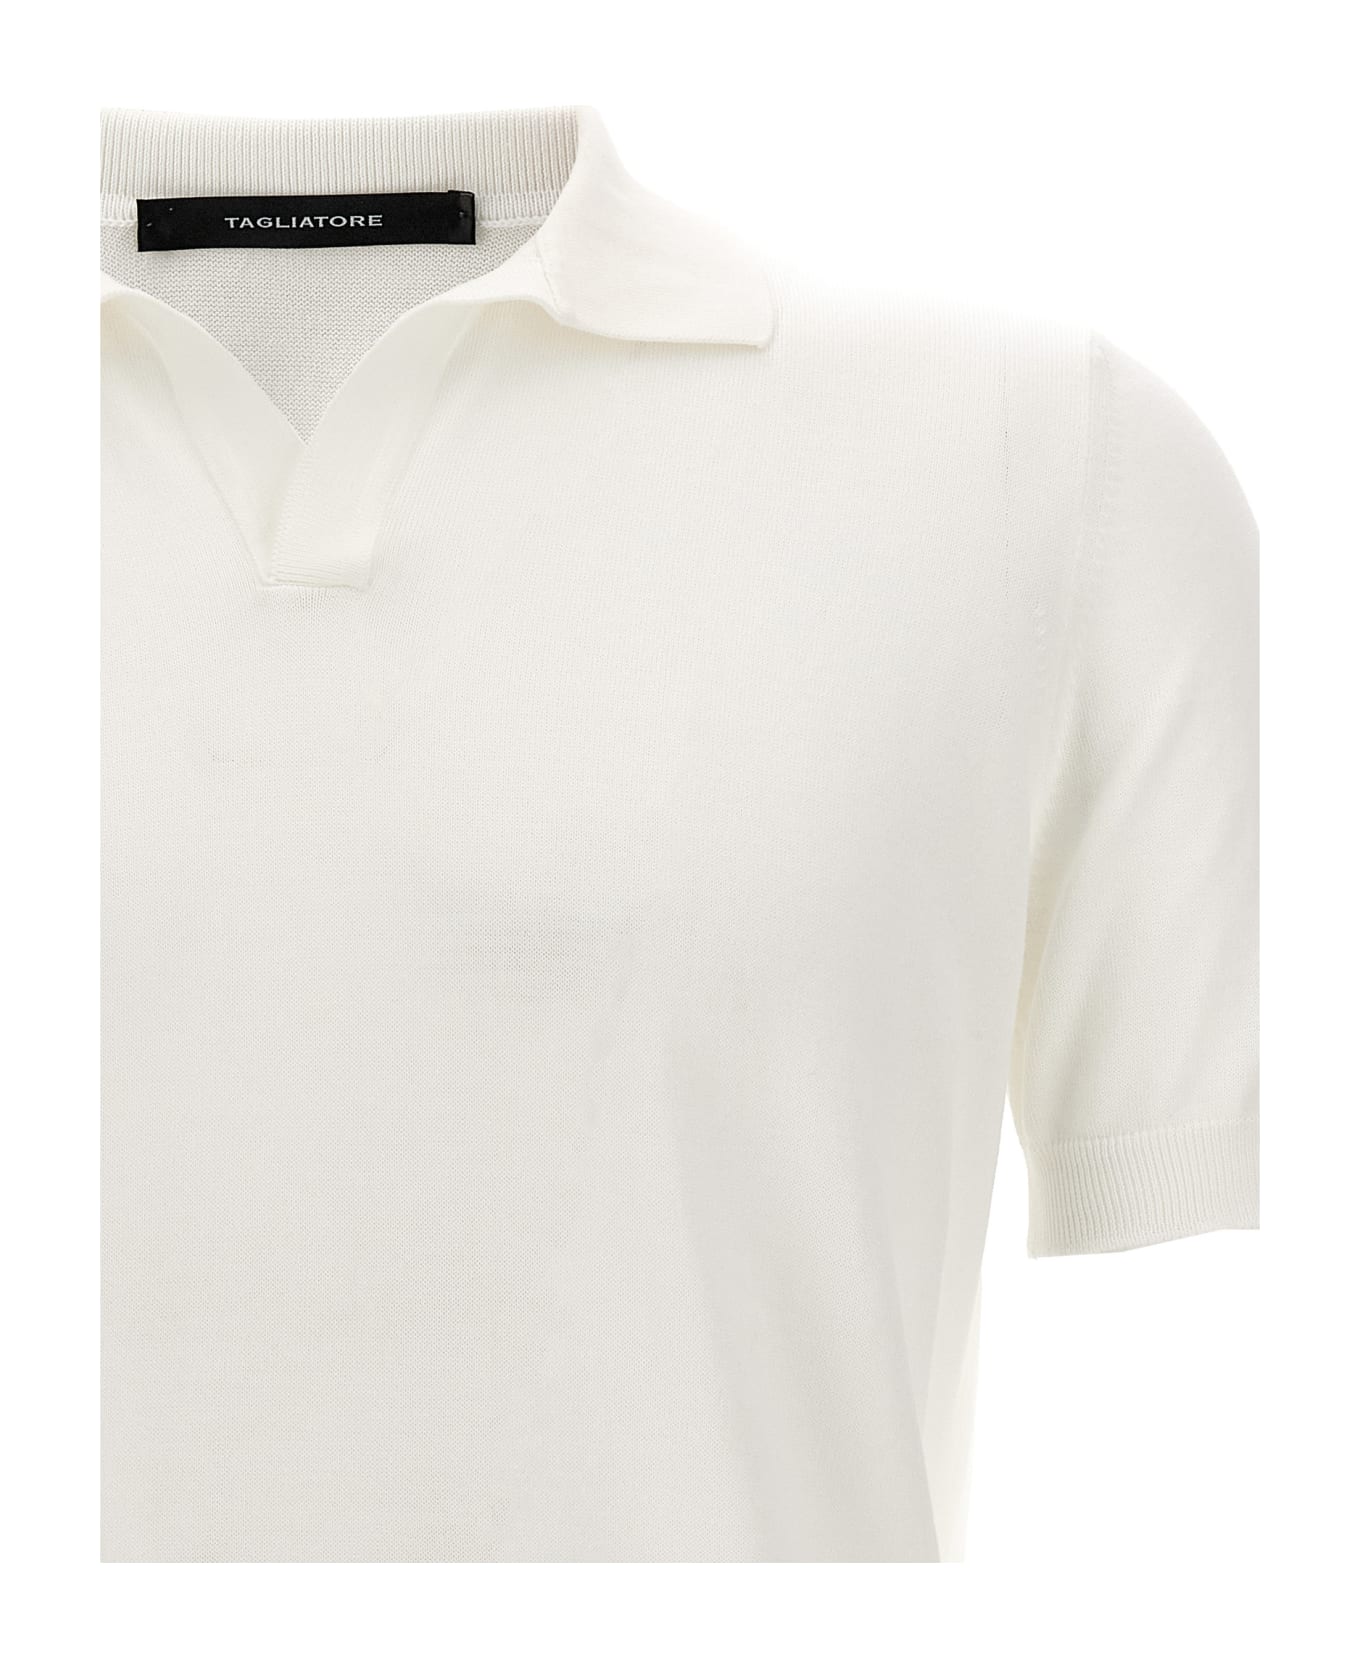 Tagliatore Knitted Polo Shirt - White